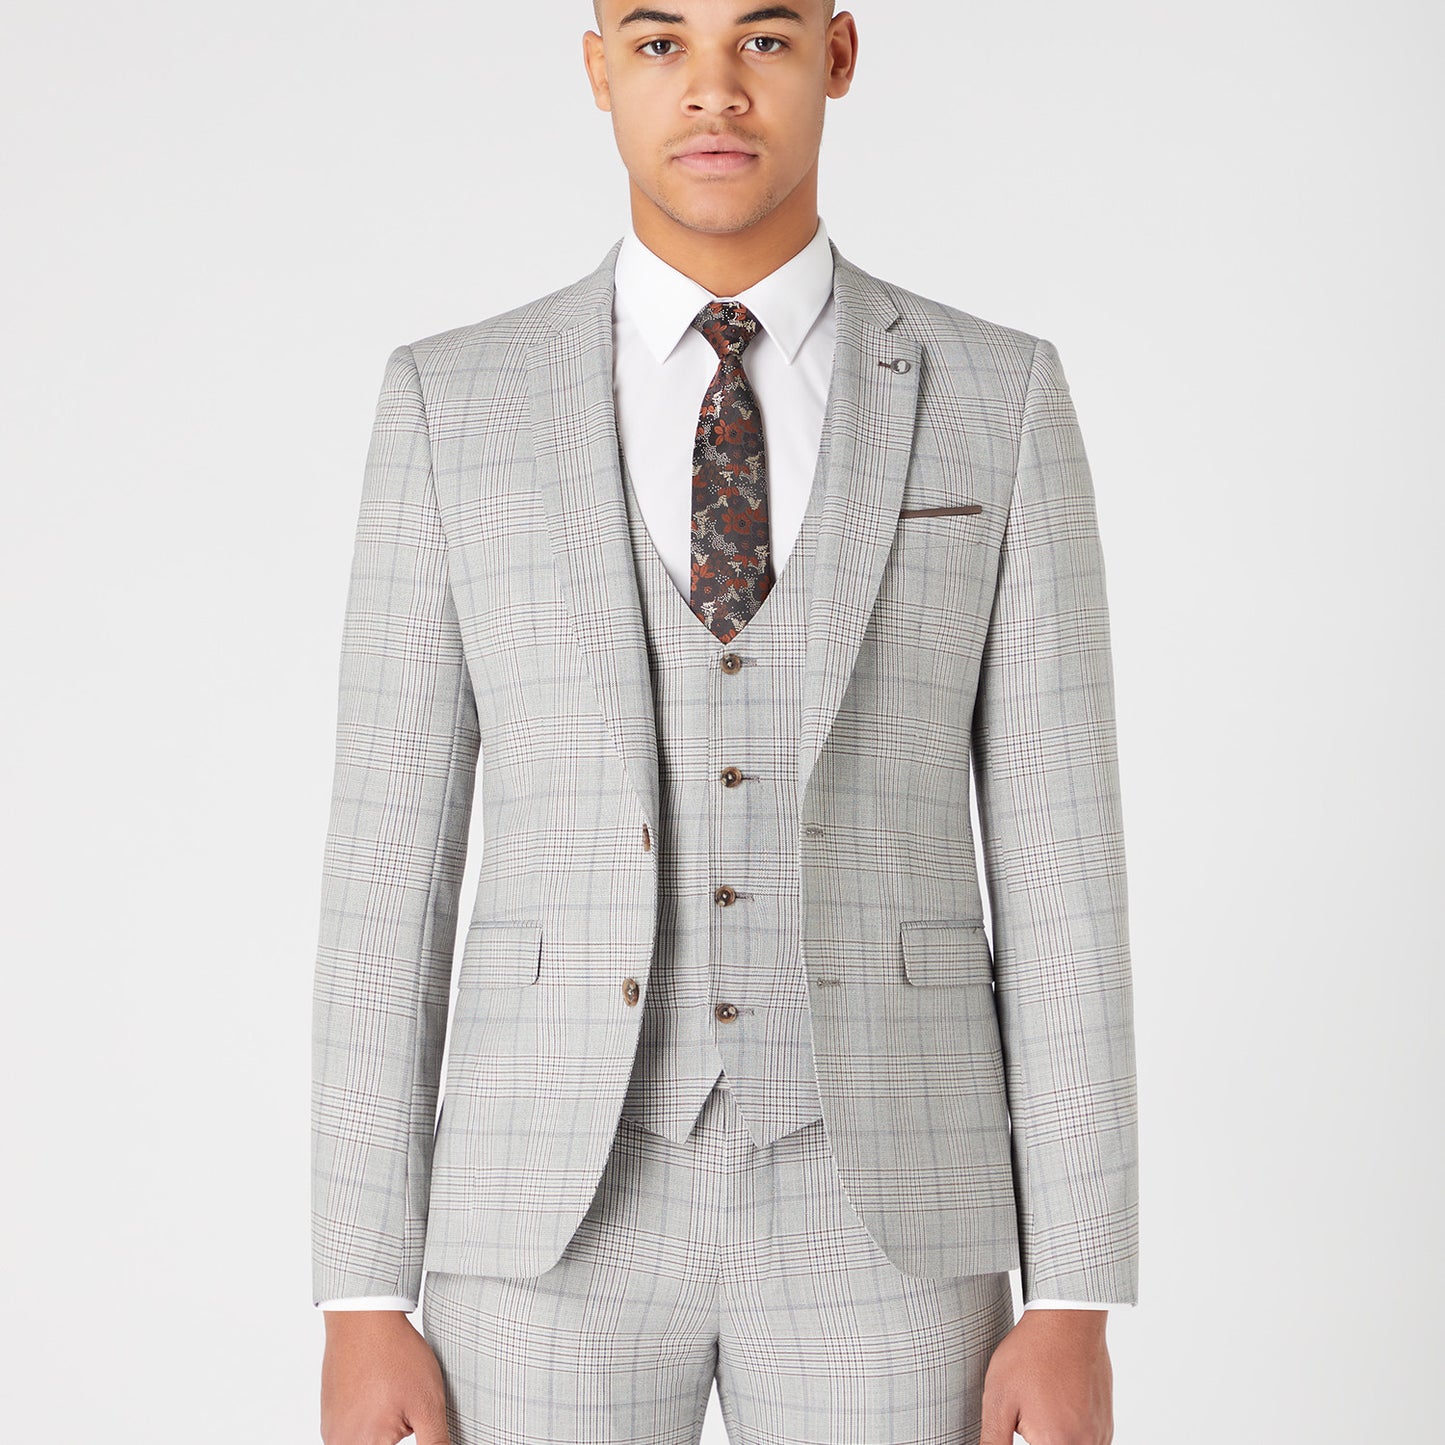 Remus Uomo 42035 04 Grey Tapered Suit Jacket